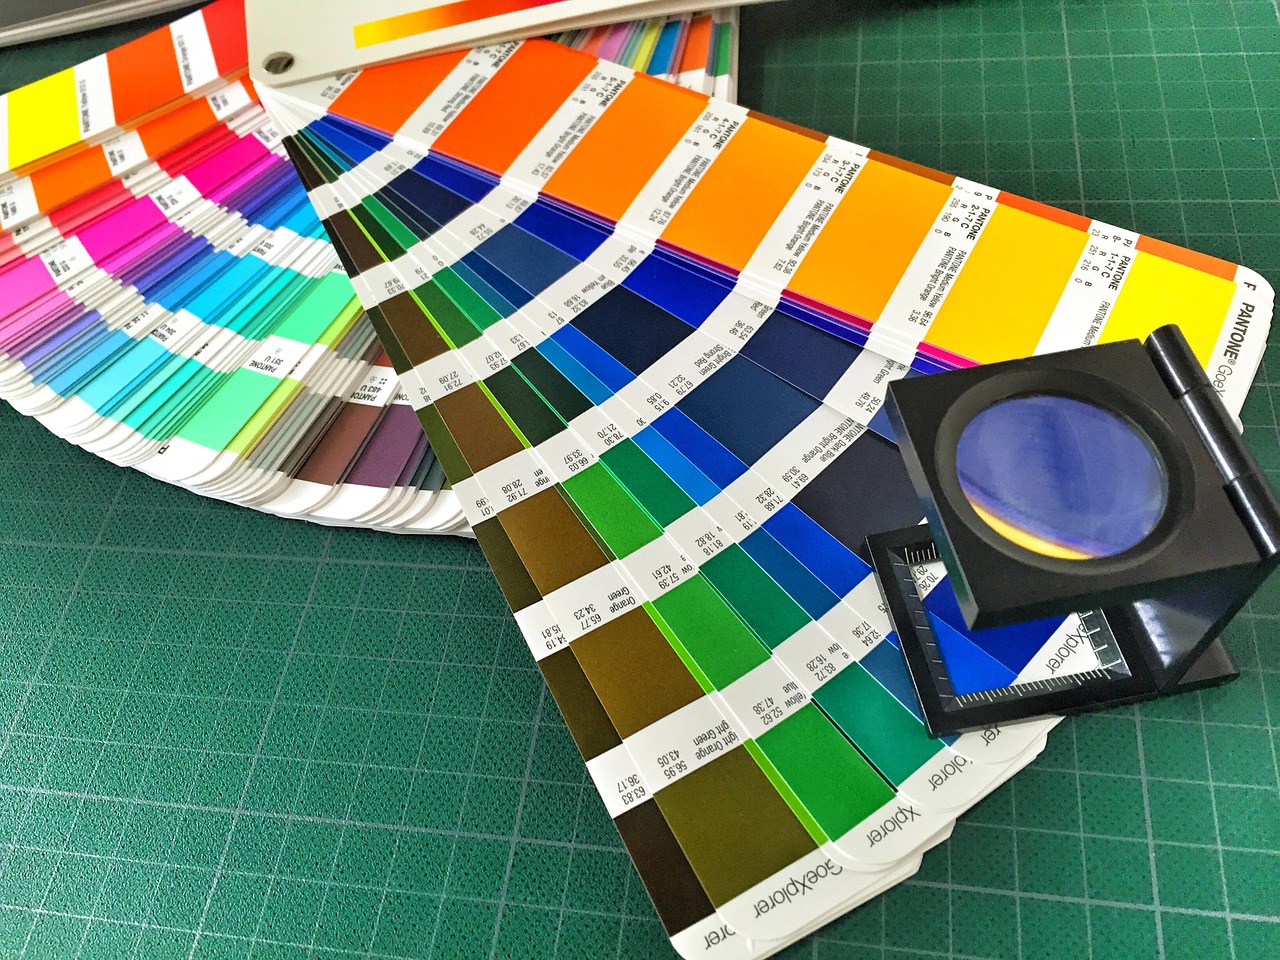 Pantone colors of various shades.